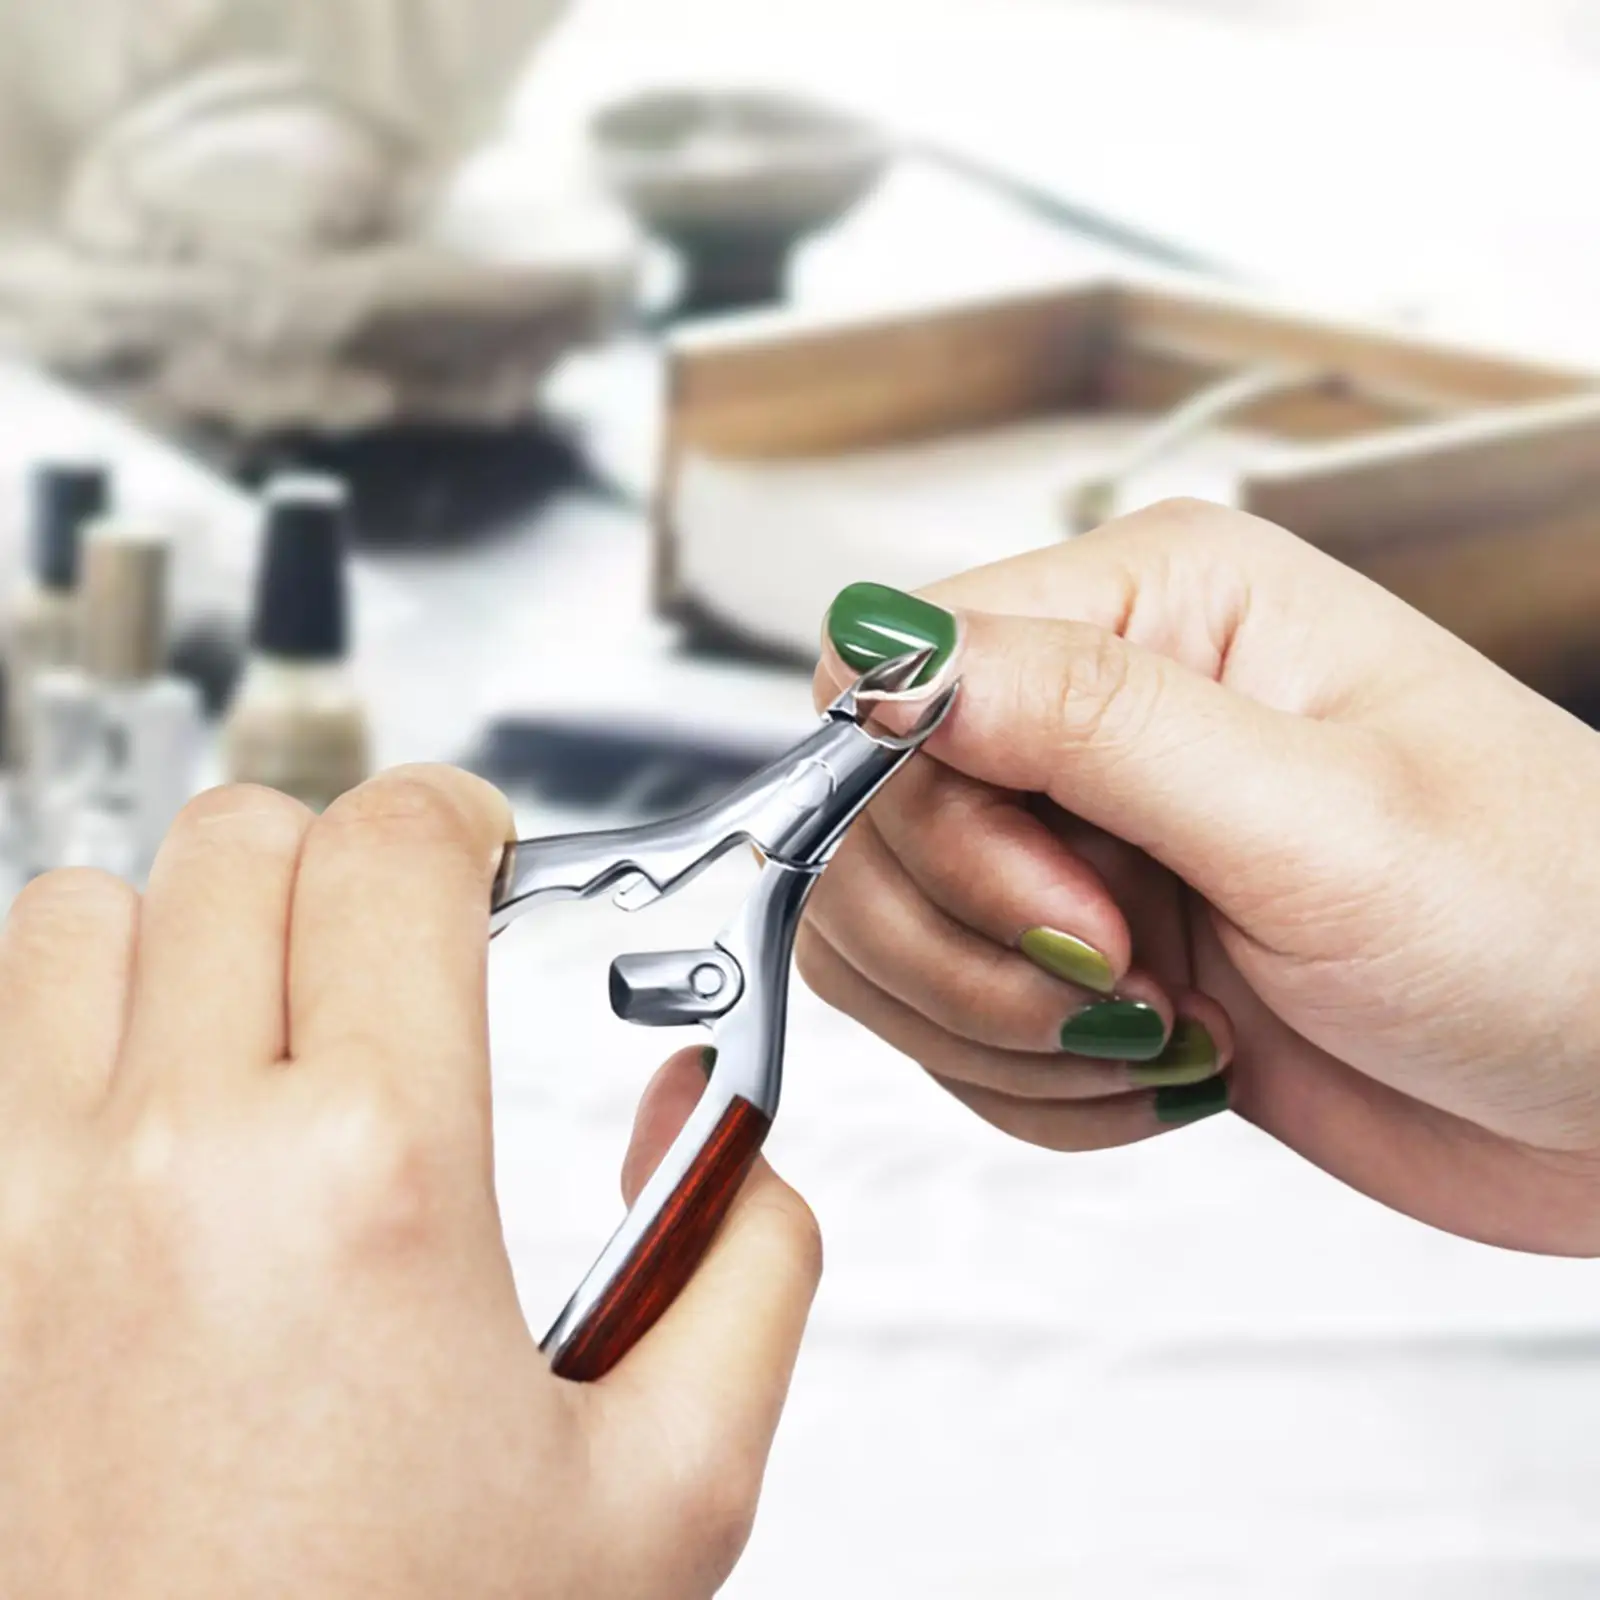 Manicure Nippers Durable Premium Professional Precise Nail Trimmer Remover Manicure Plier for Fingernails and Toenails SPA Salon